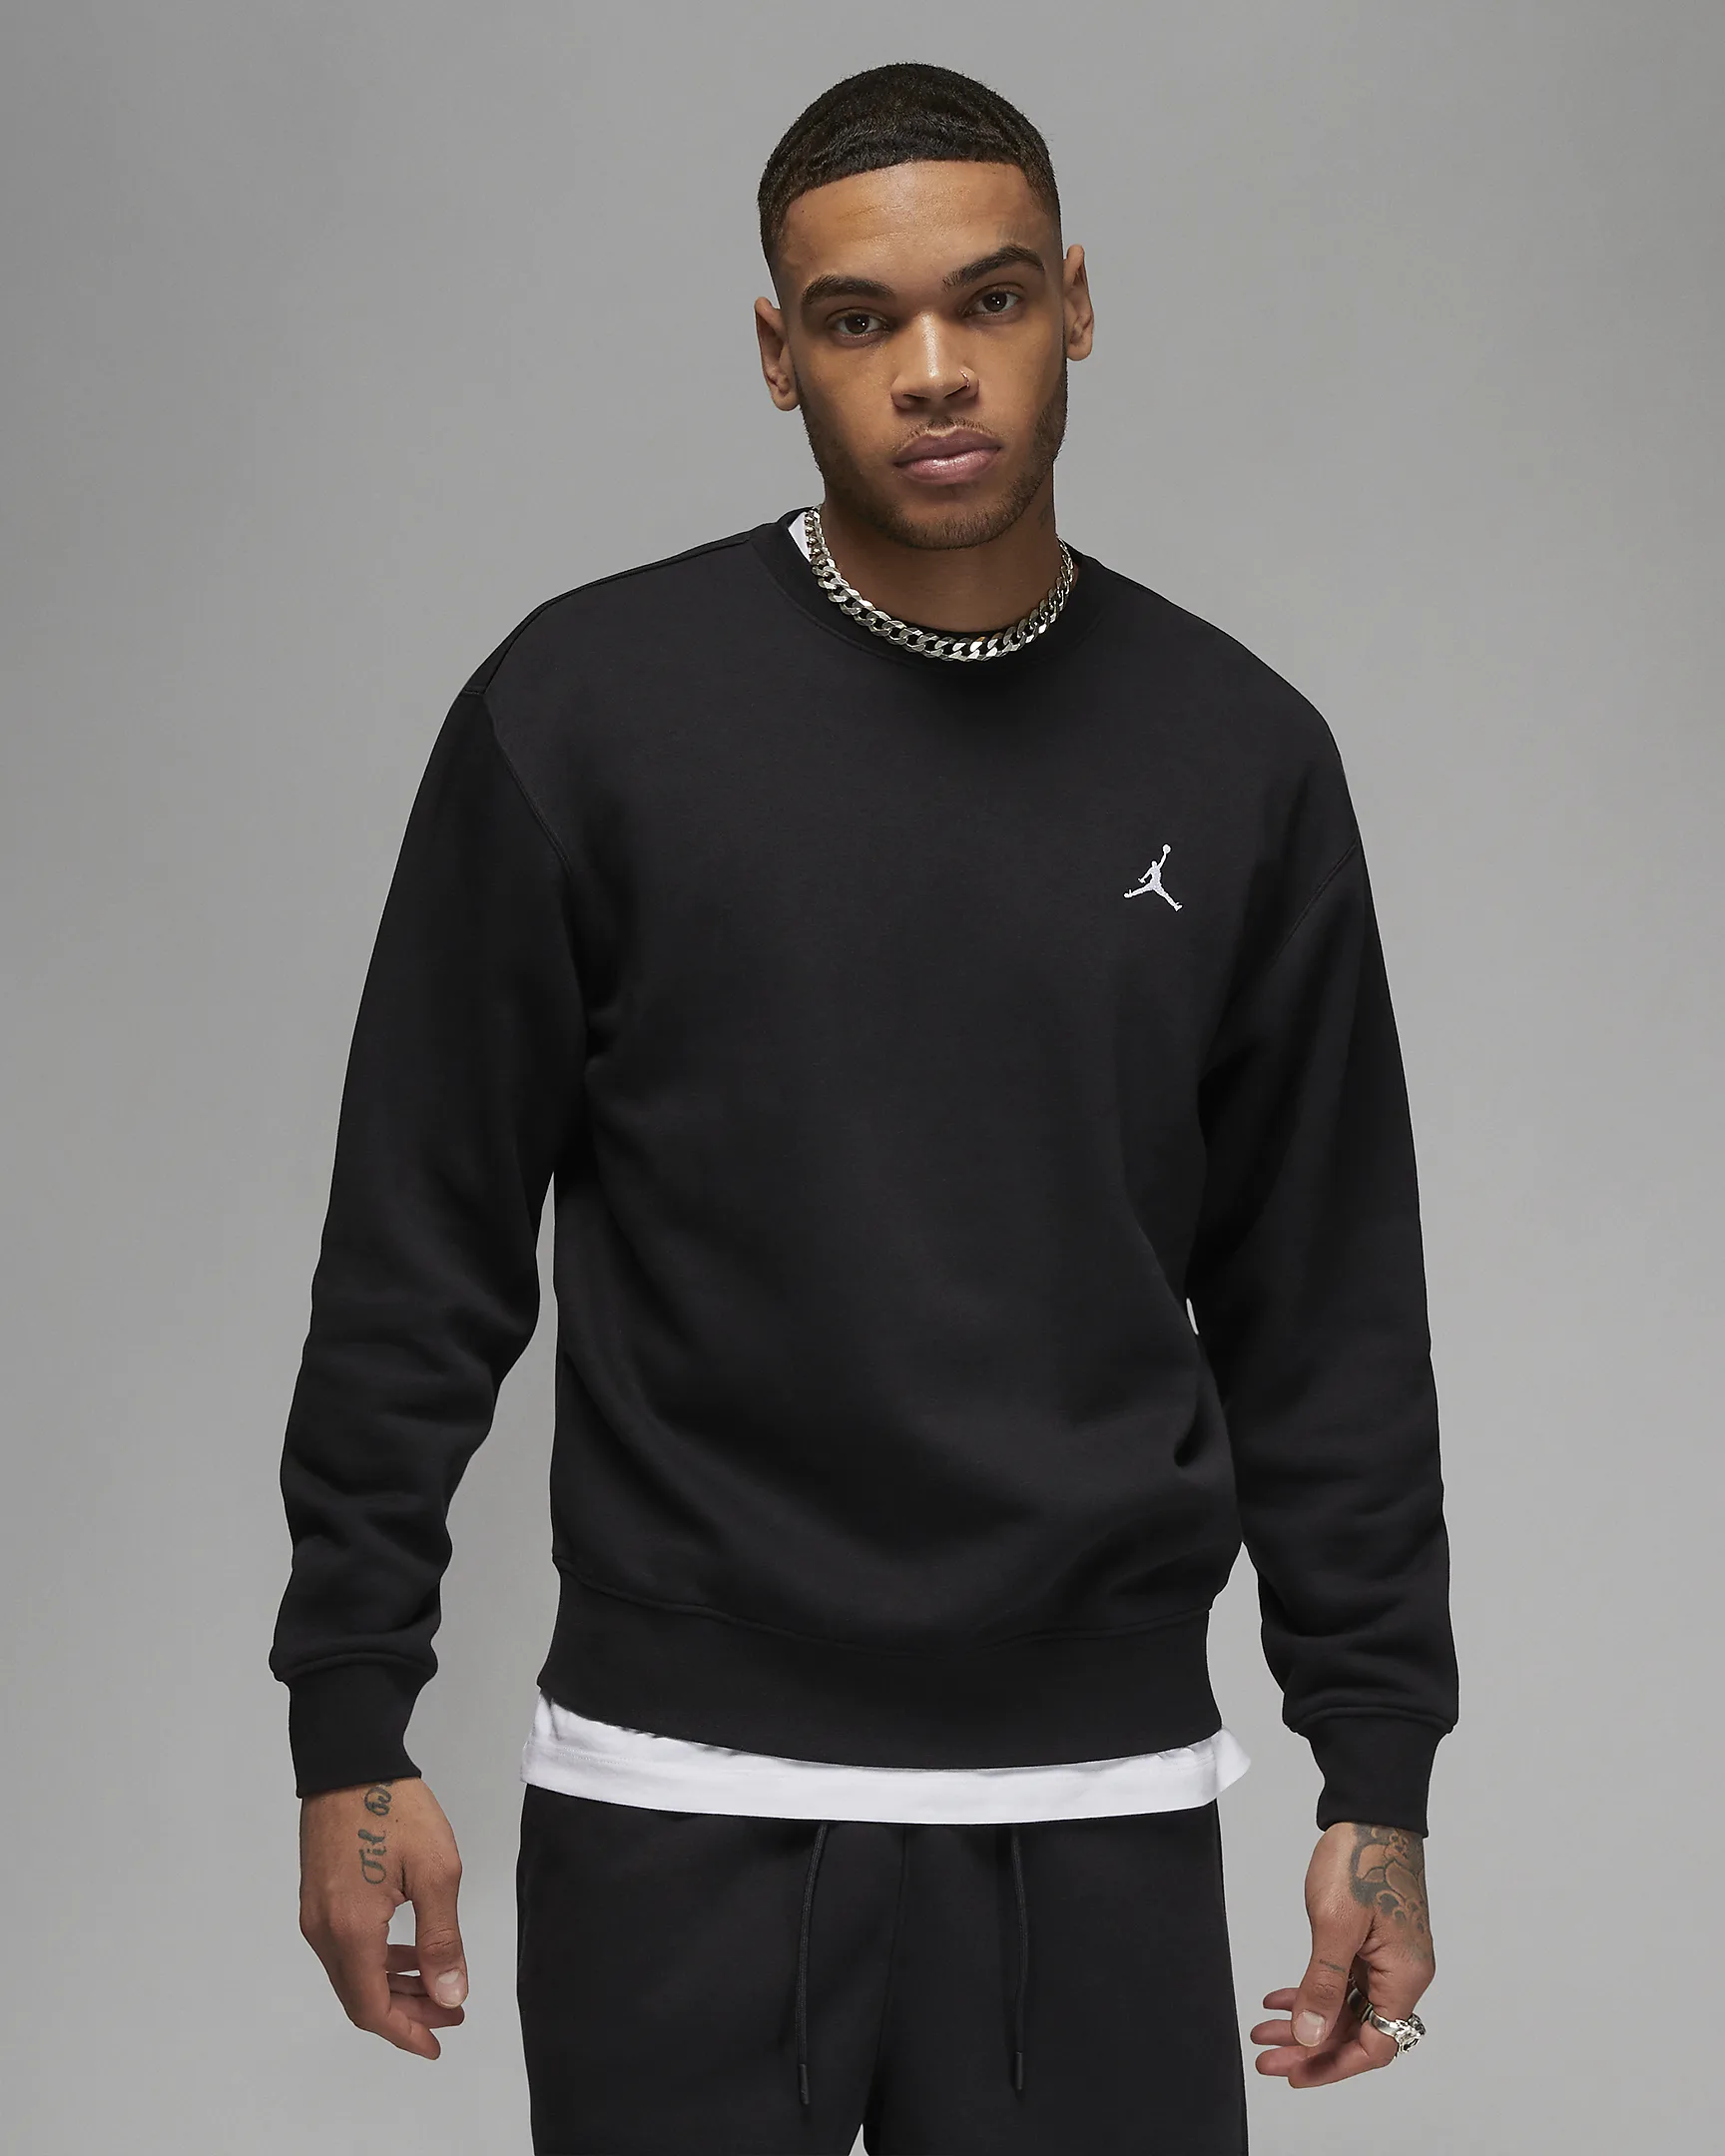 Jordan Brand sweater black